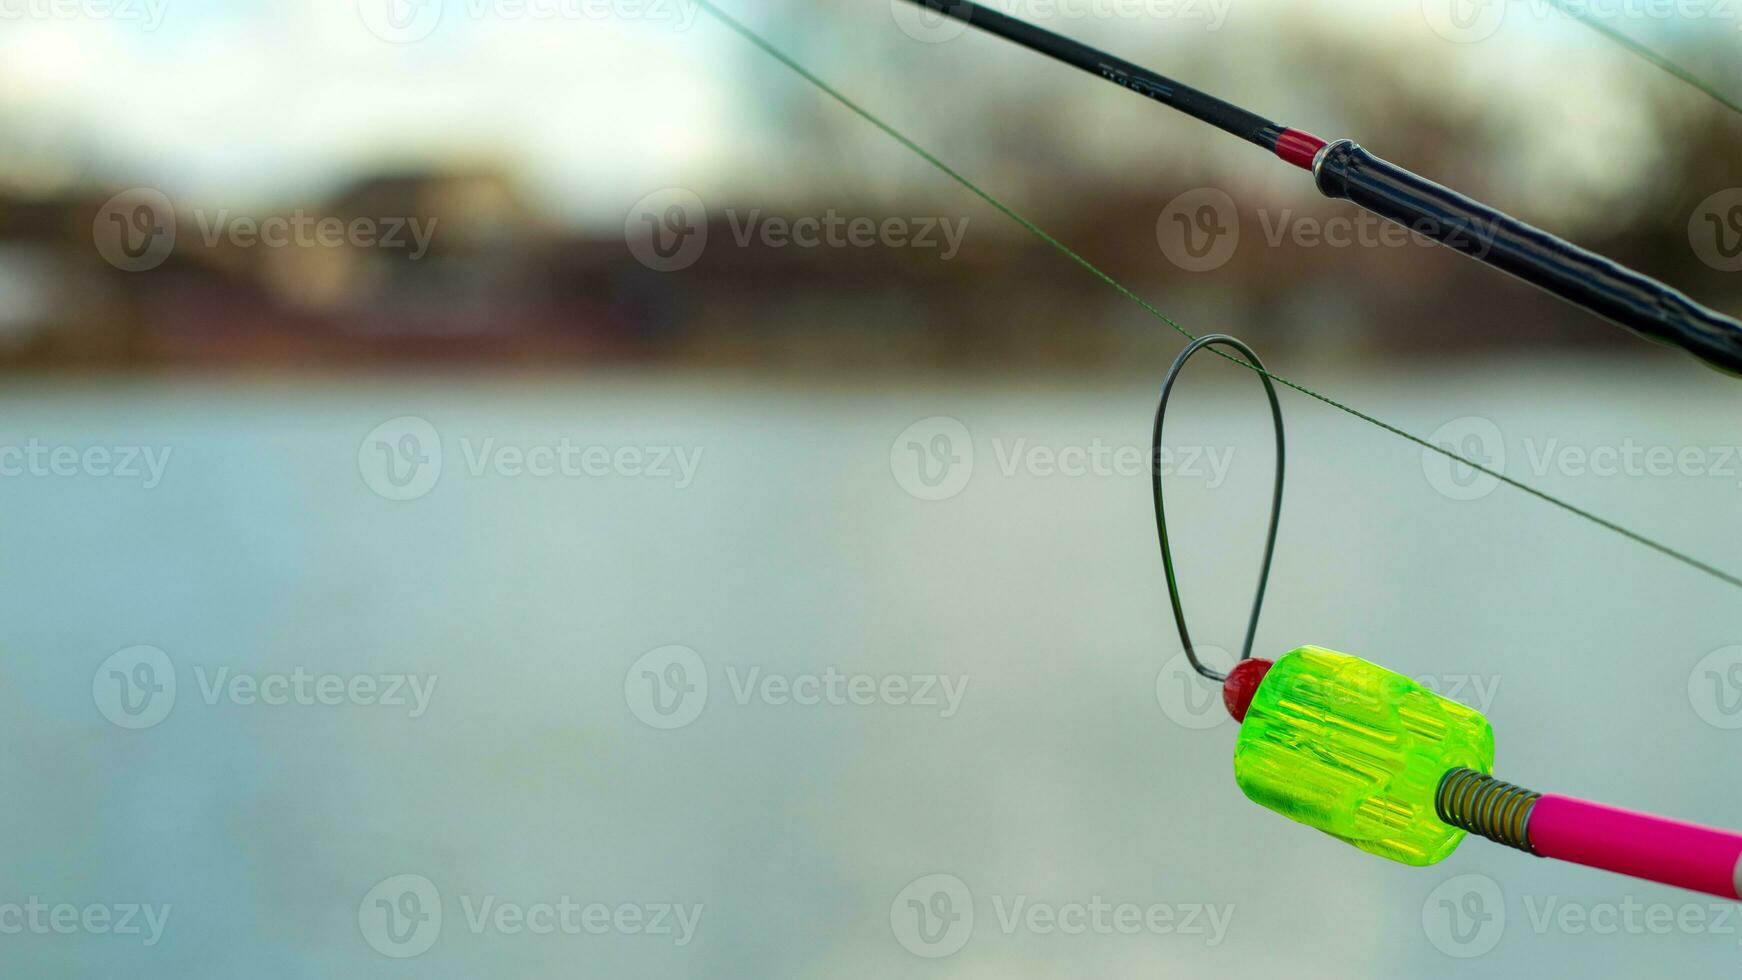 de bita larm hänger på en fiske stång mot de bakgrund av vatten. fiske stång medan fiske på de sjö, flod. fiske tackla. karp stång på en stå med en bita larm på de linje. foto